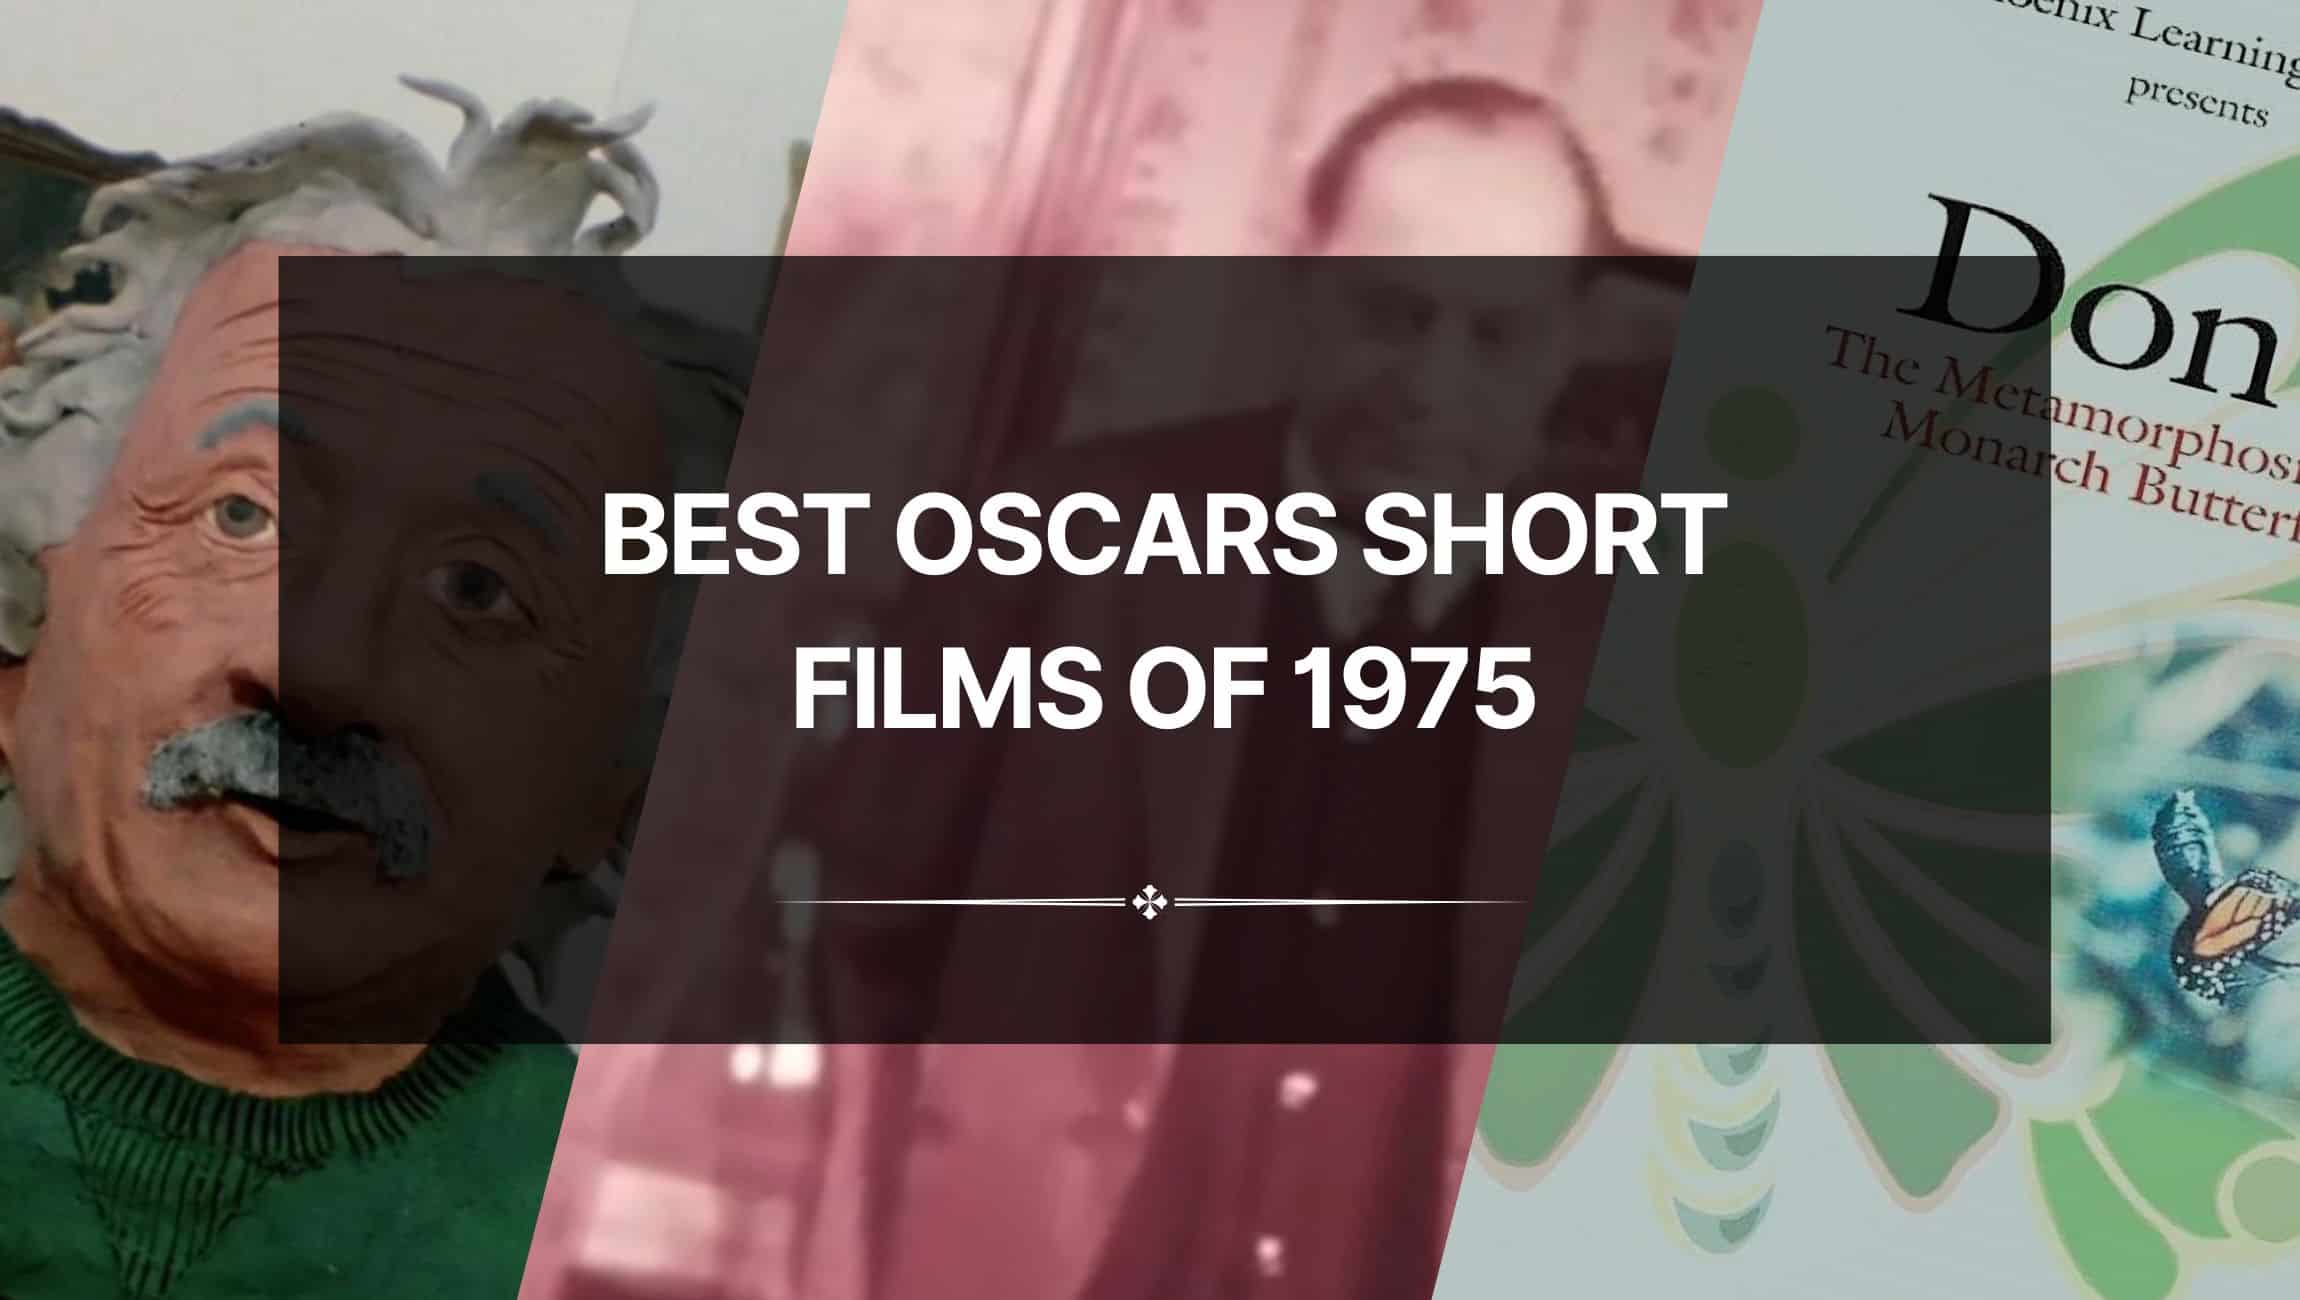 Best Oscars Short Films of 1975